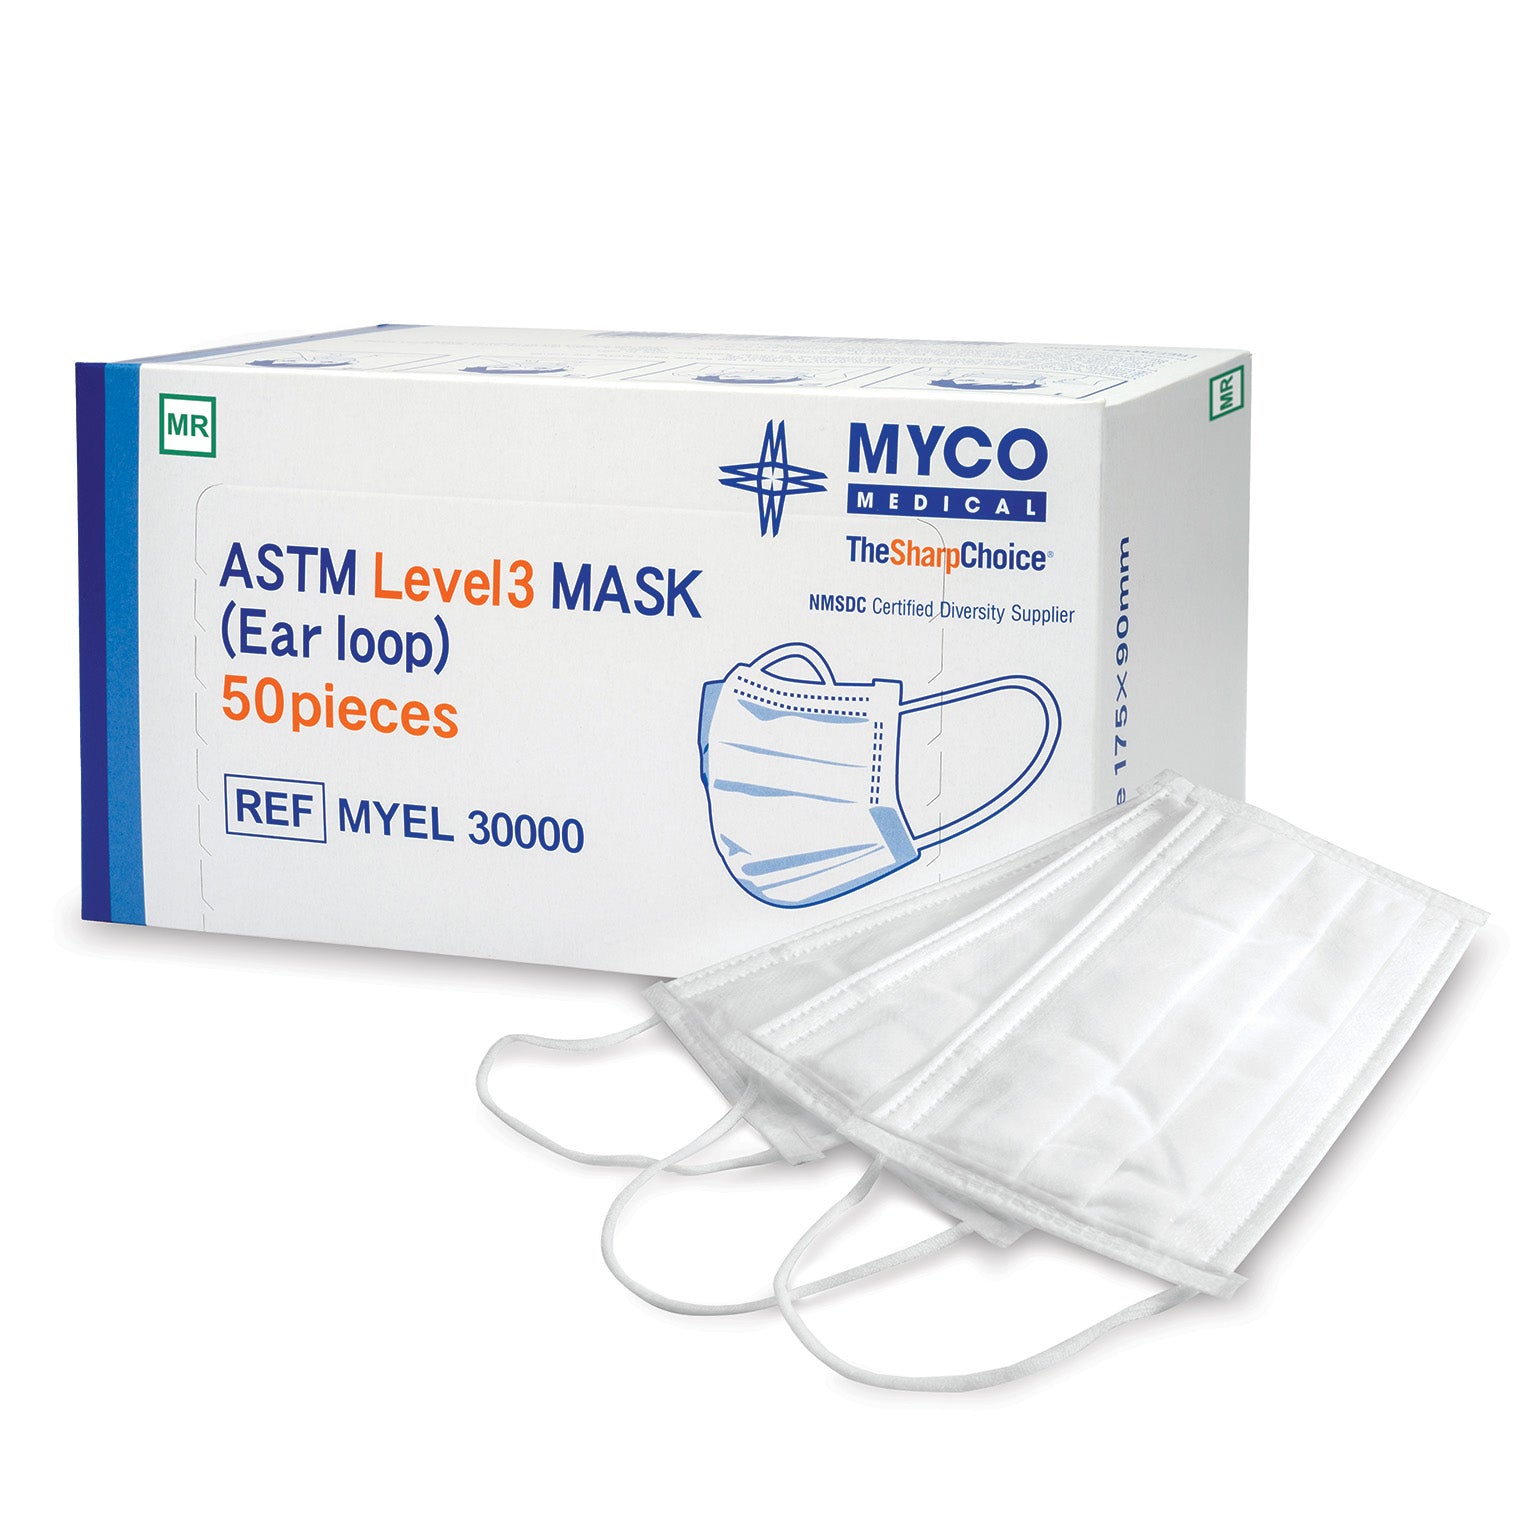 MRI Safe Procedure Mask, ASTM Level 3, Earloop - Myco (Box of 50)